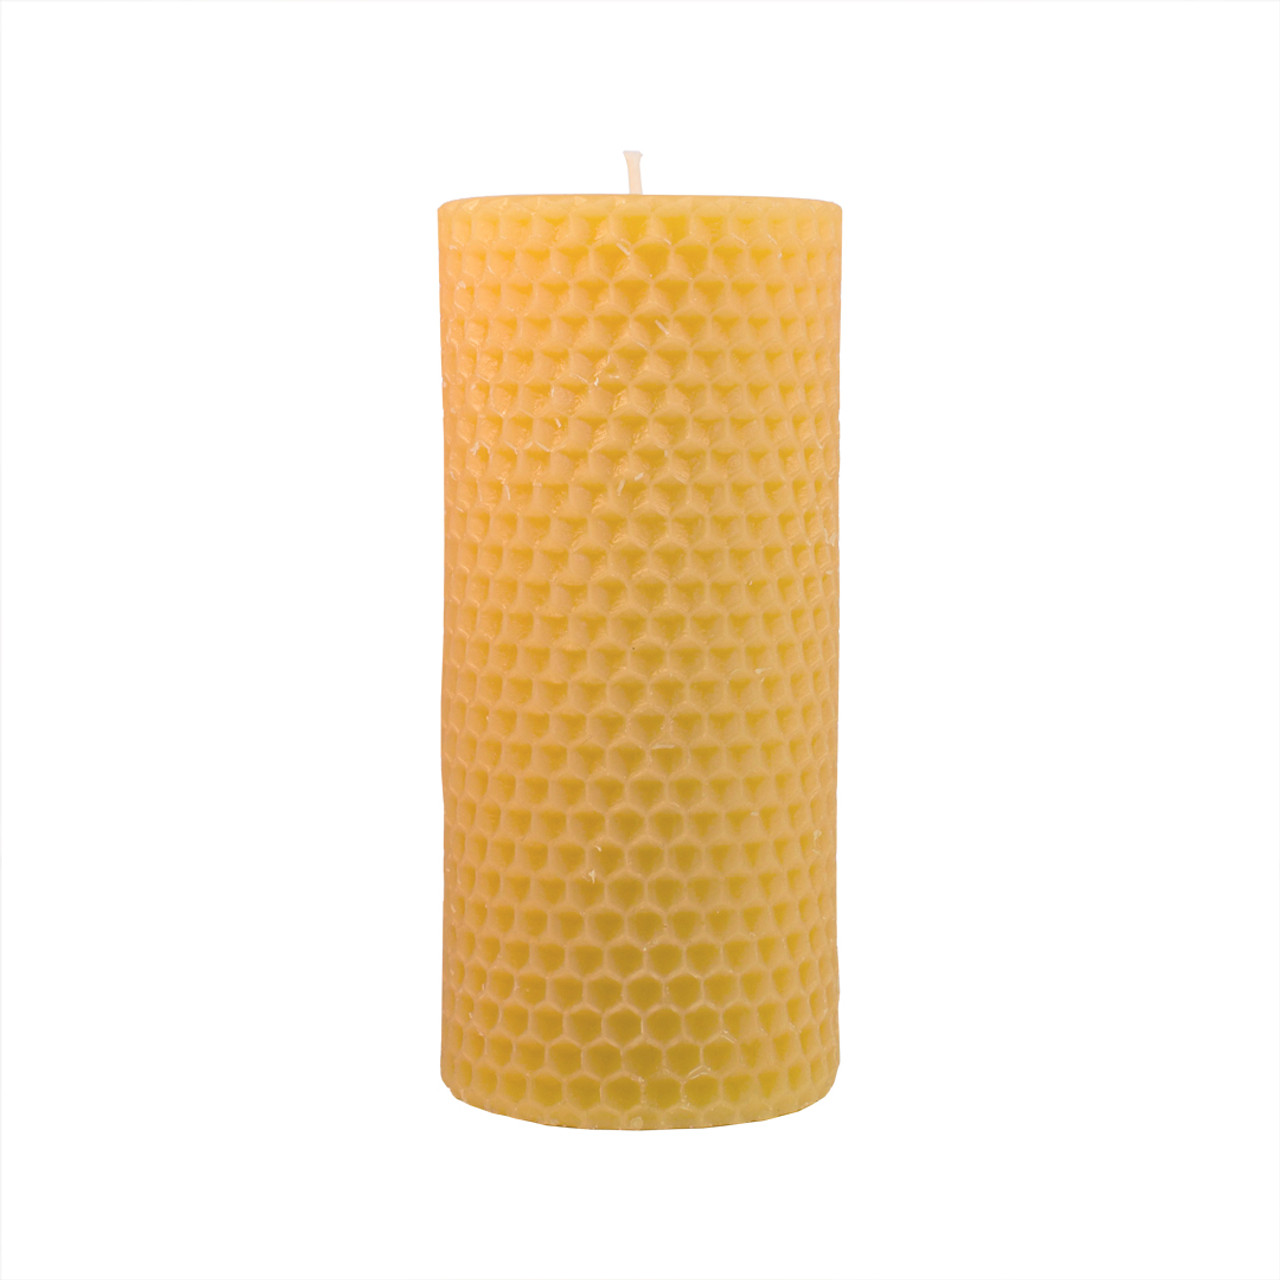 Sunbeam Candles 2 X3 Beeswax Honeycomb Pillar Candle